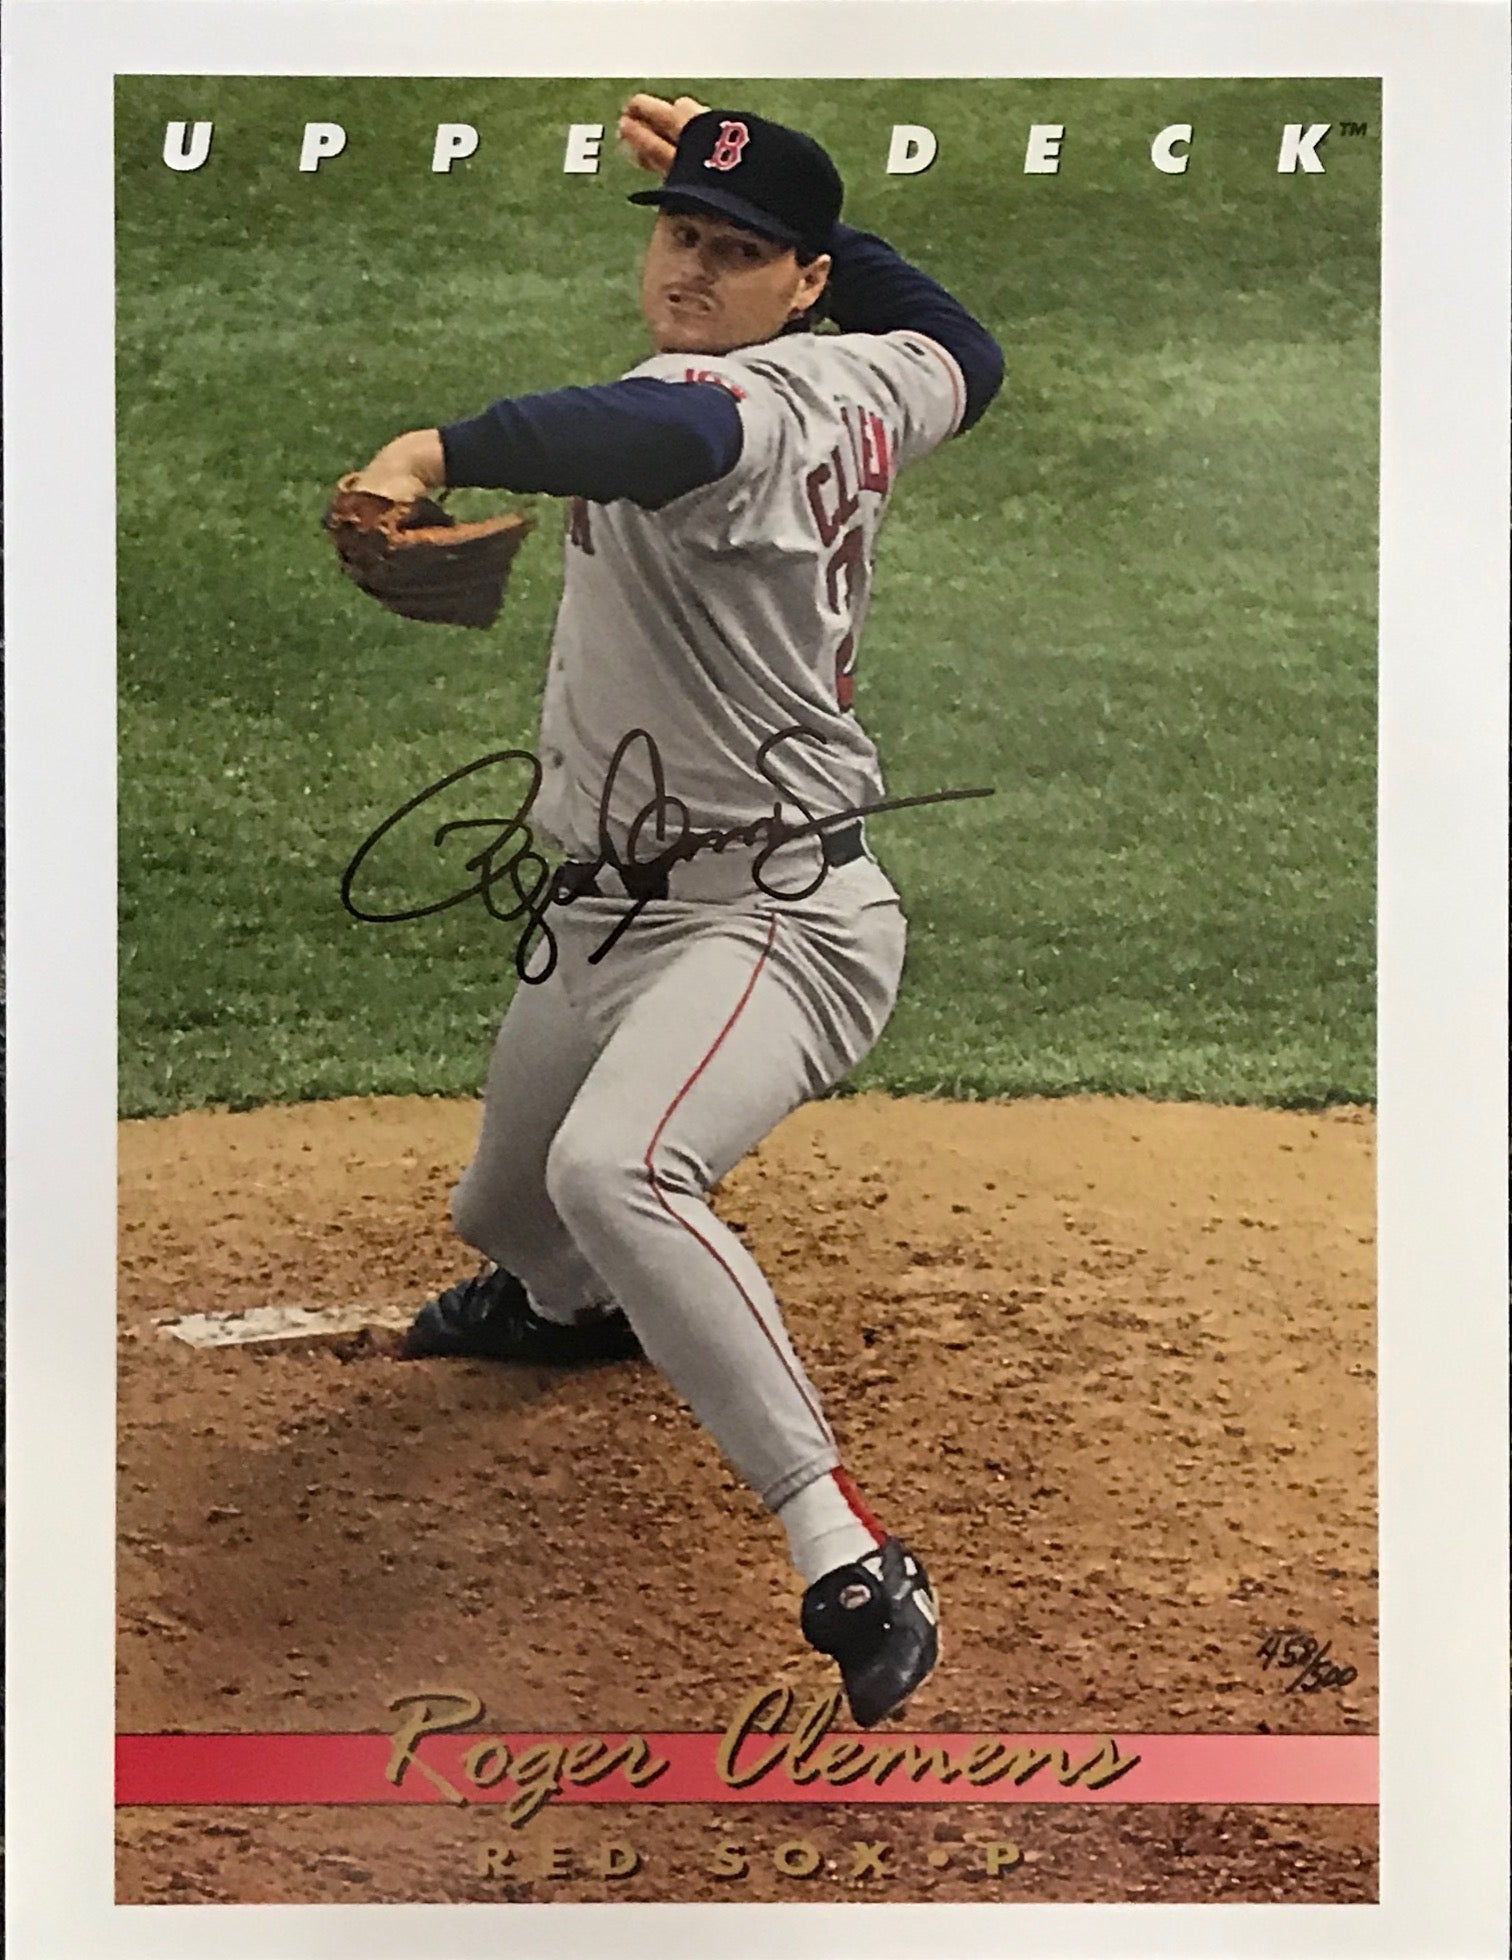 Roger Clemens Autographed 8x10 Baseball Photo Card (Upper Deck